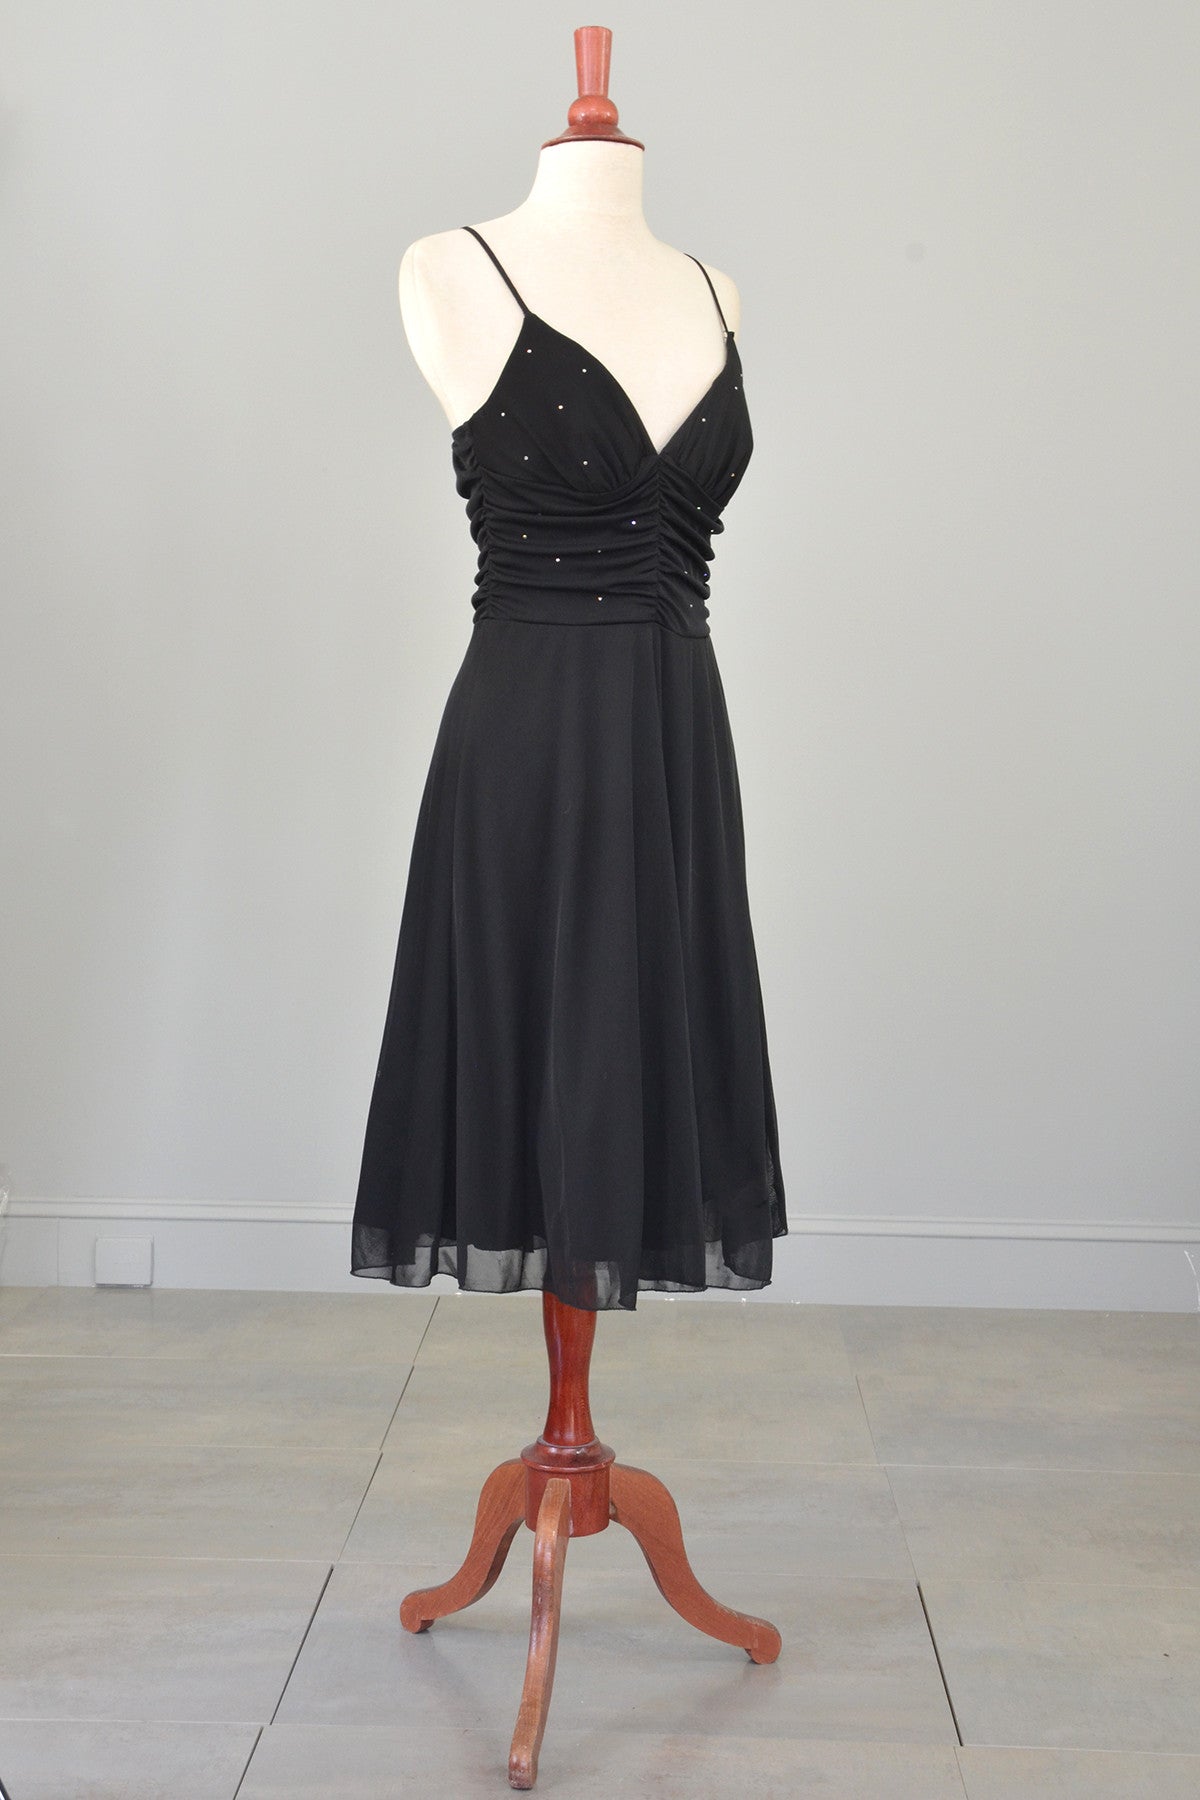 70s 80s Black Rhinestone Bodice Cocktail Party Dress | VintageVirtuosa